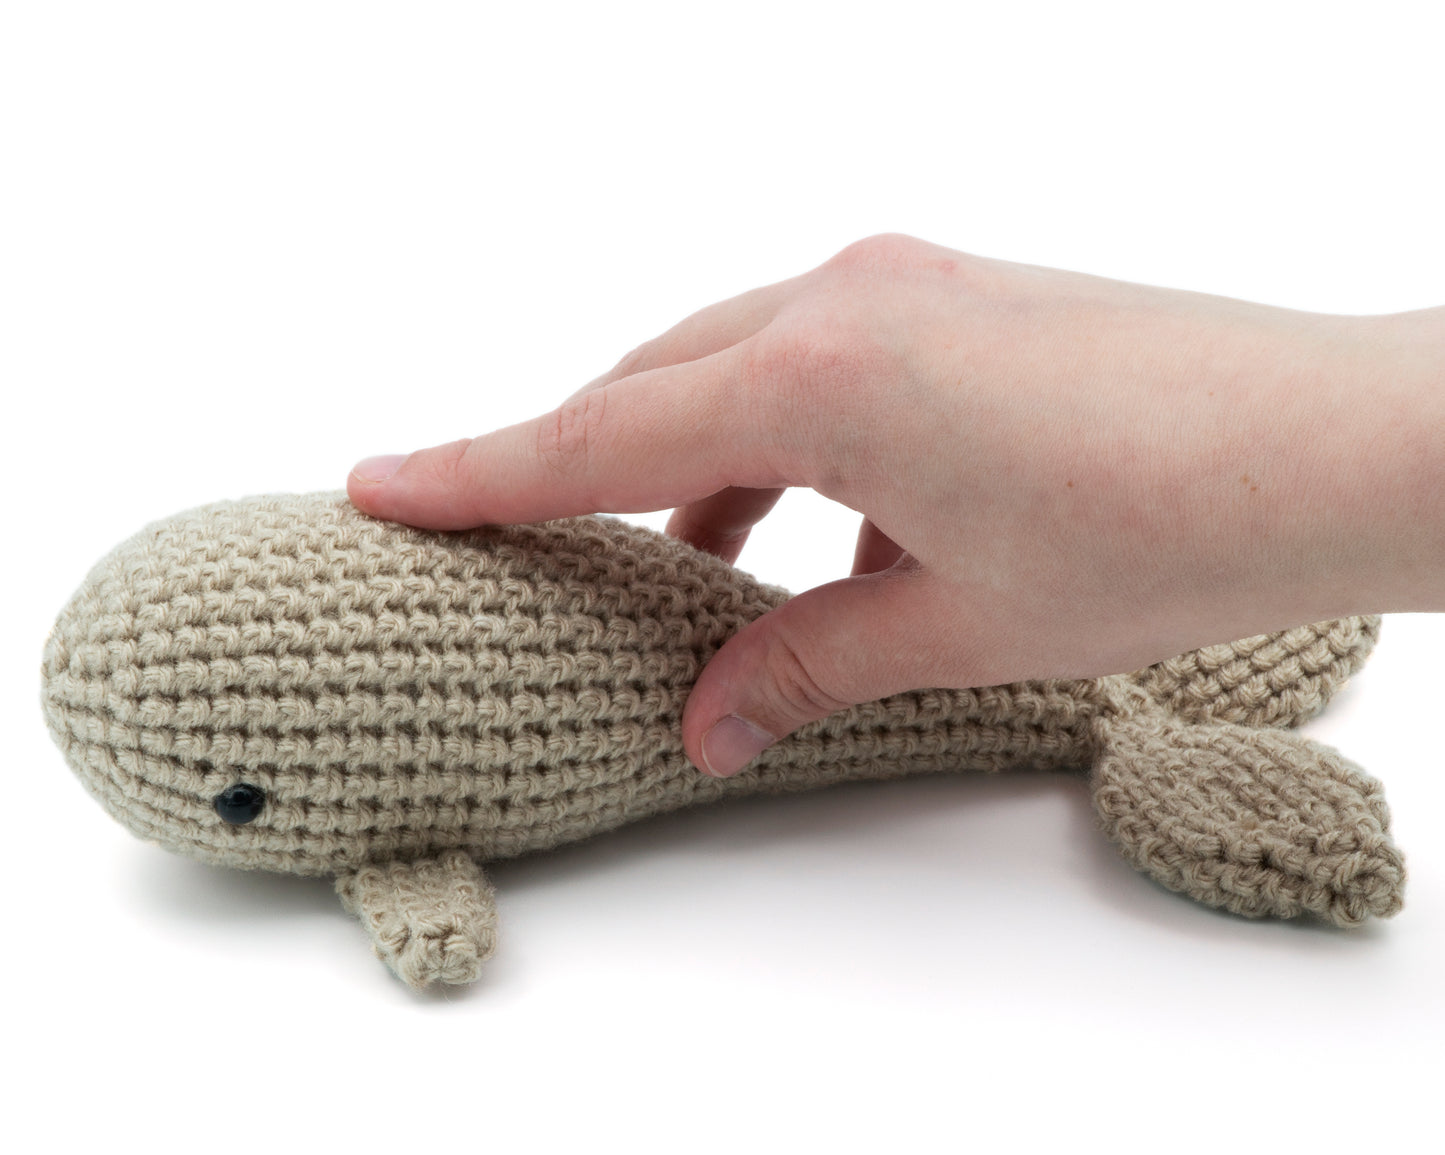 amigurumi crochet whale pattern in hand for size comparison